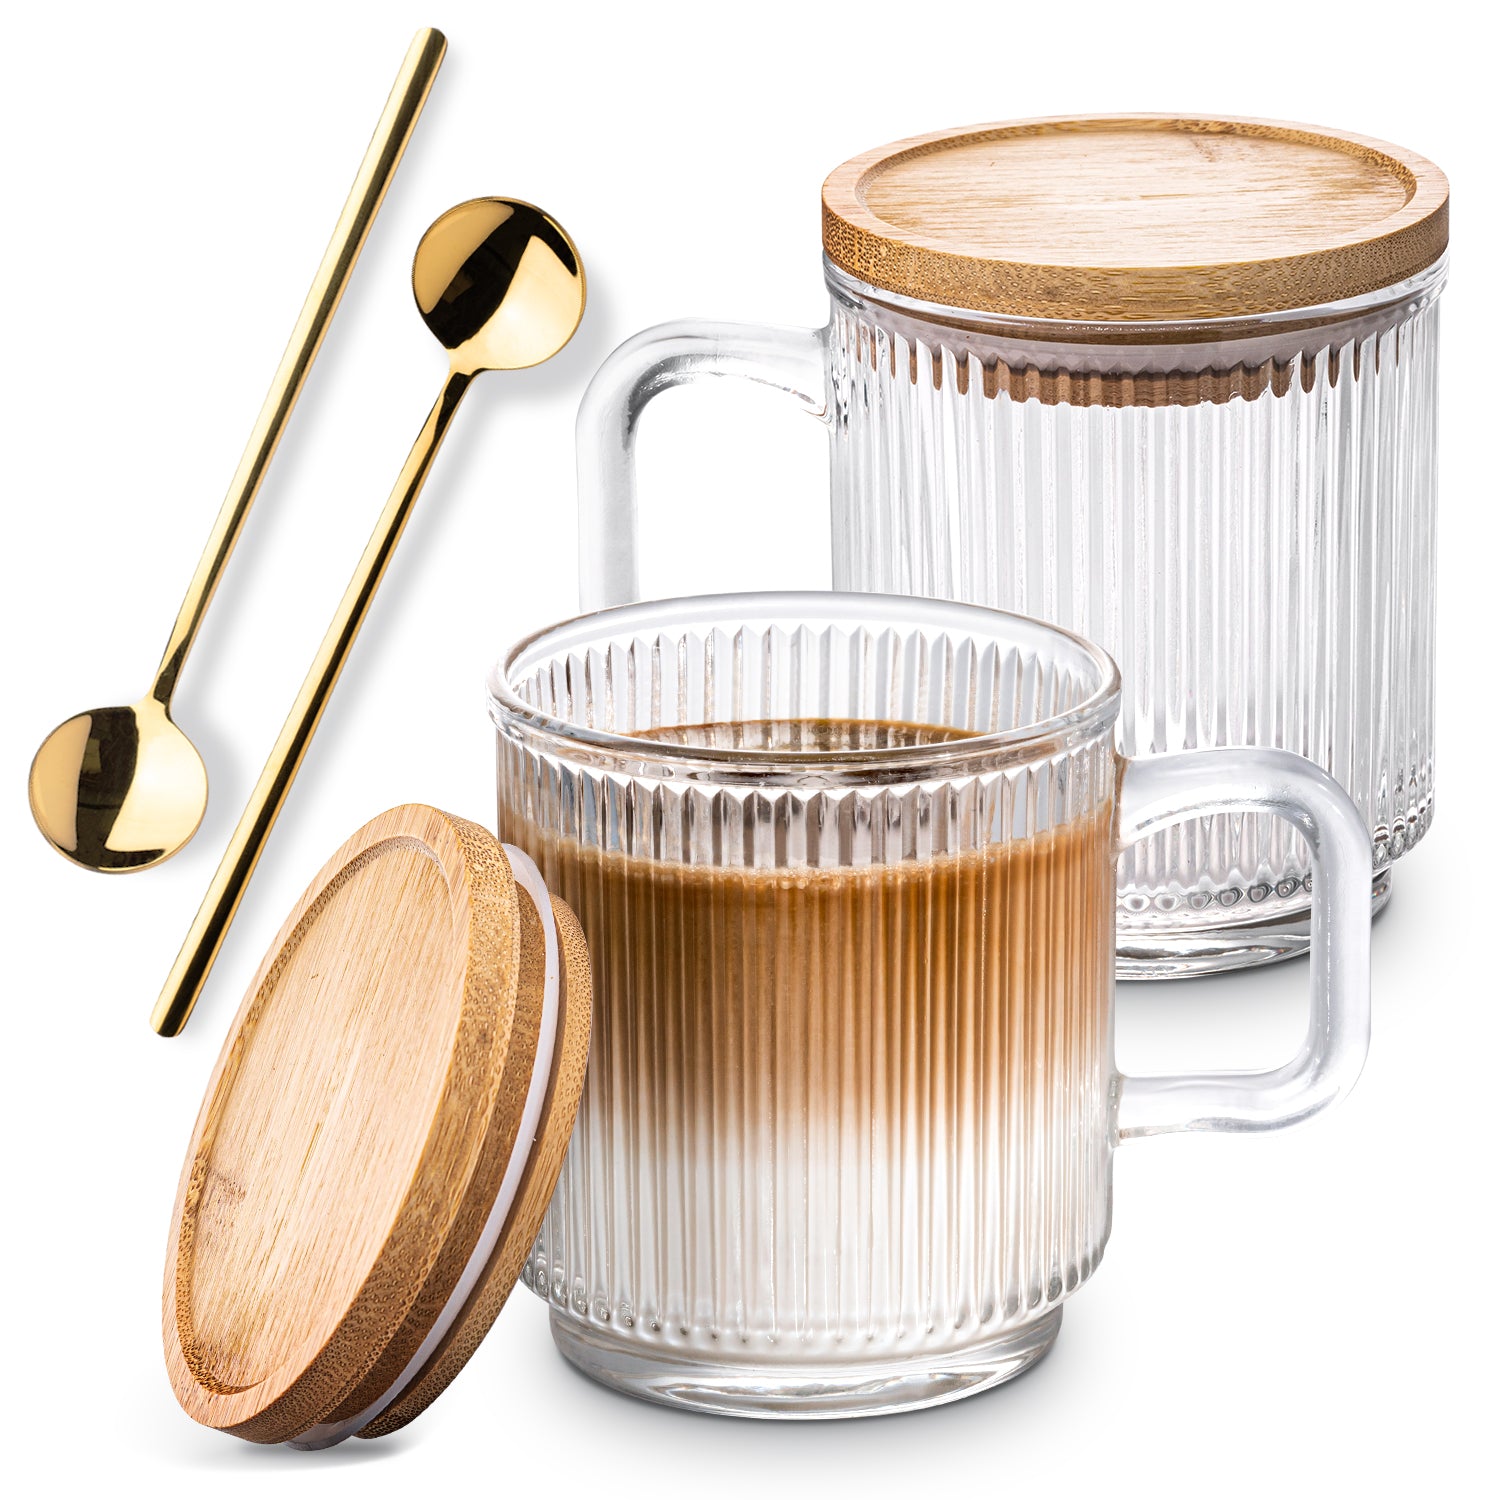 Iced Coffee High Borosilicate Glass Cup With Handles, Irish Glass